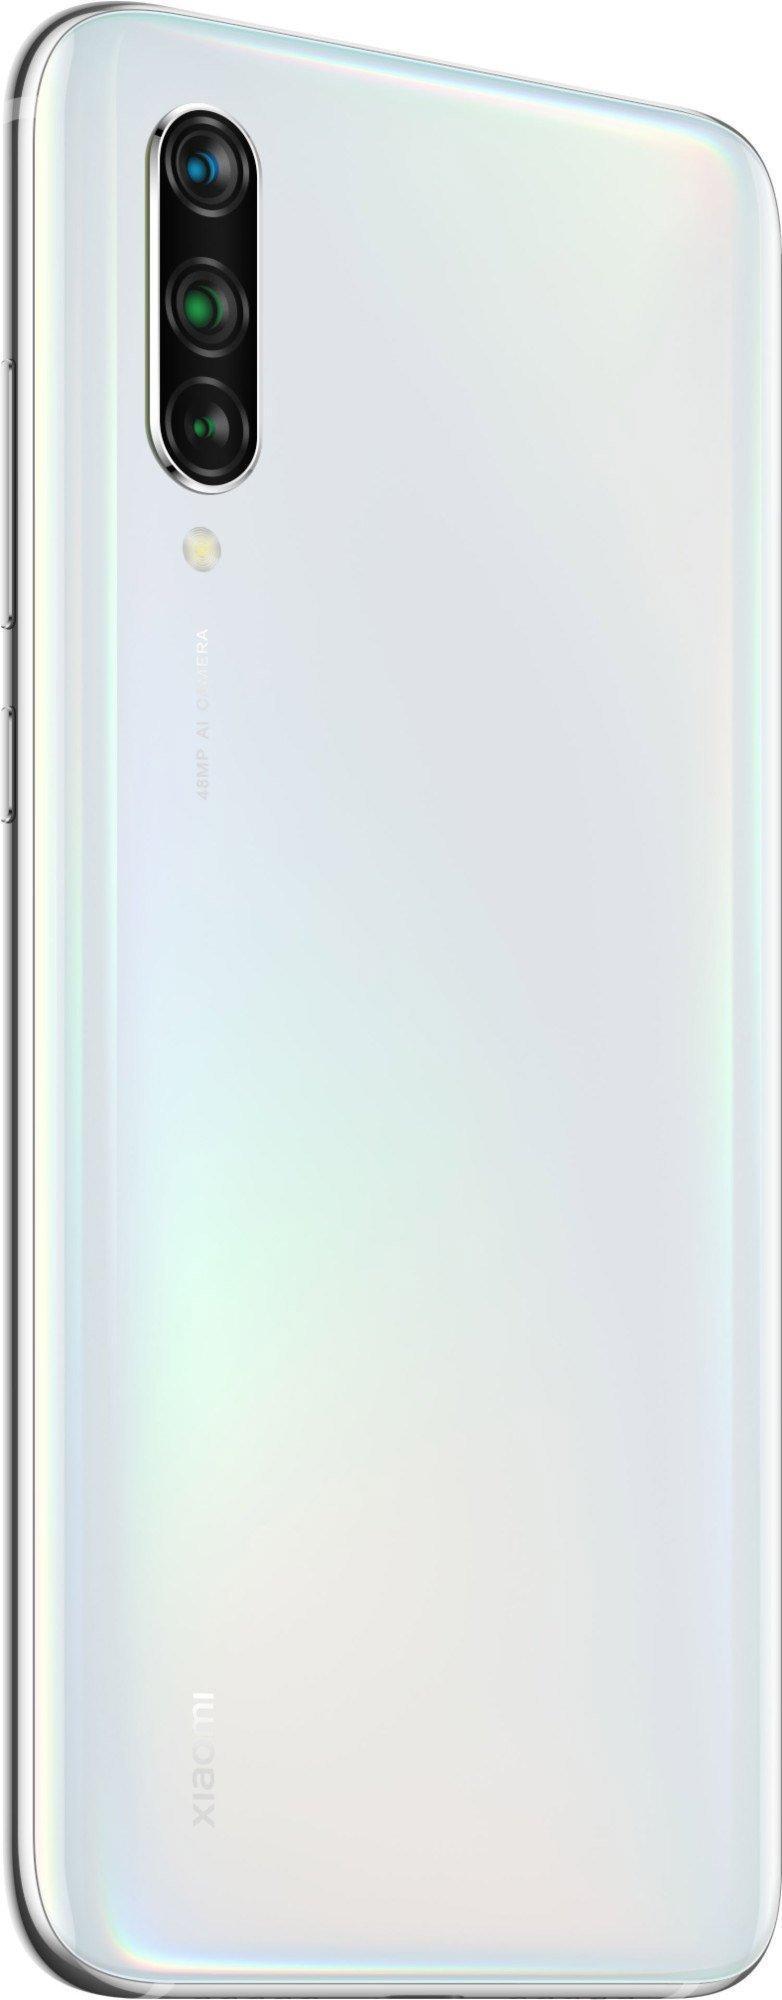 Смартфон Xiaomi Mi 9 Lite 6/64Gb Pearl White заказать